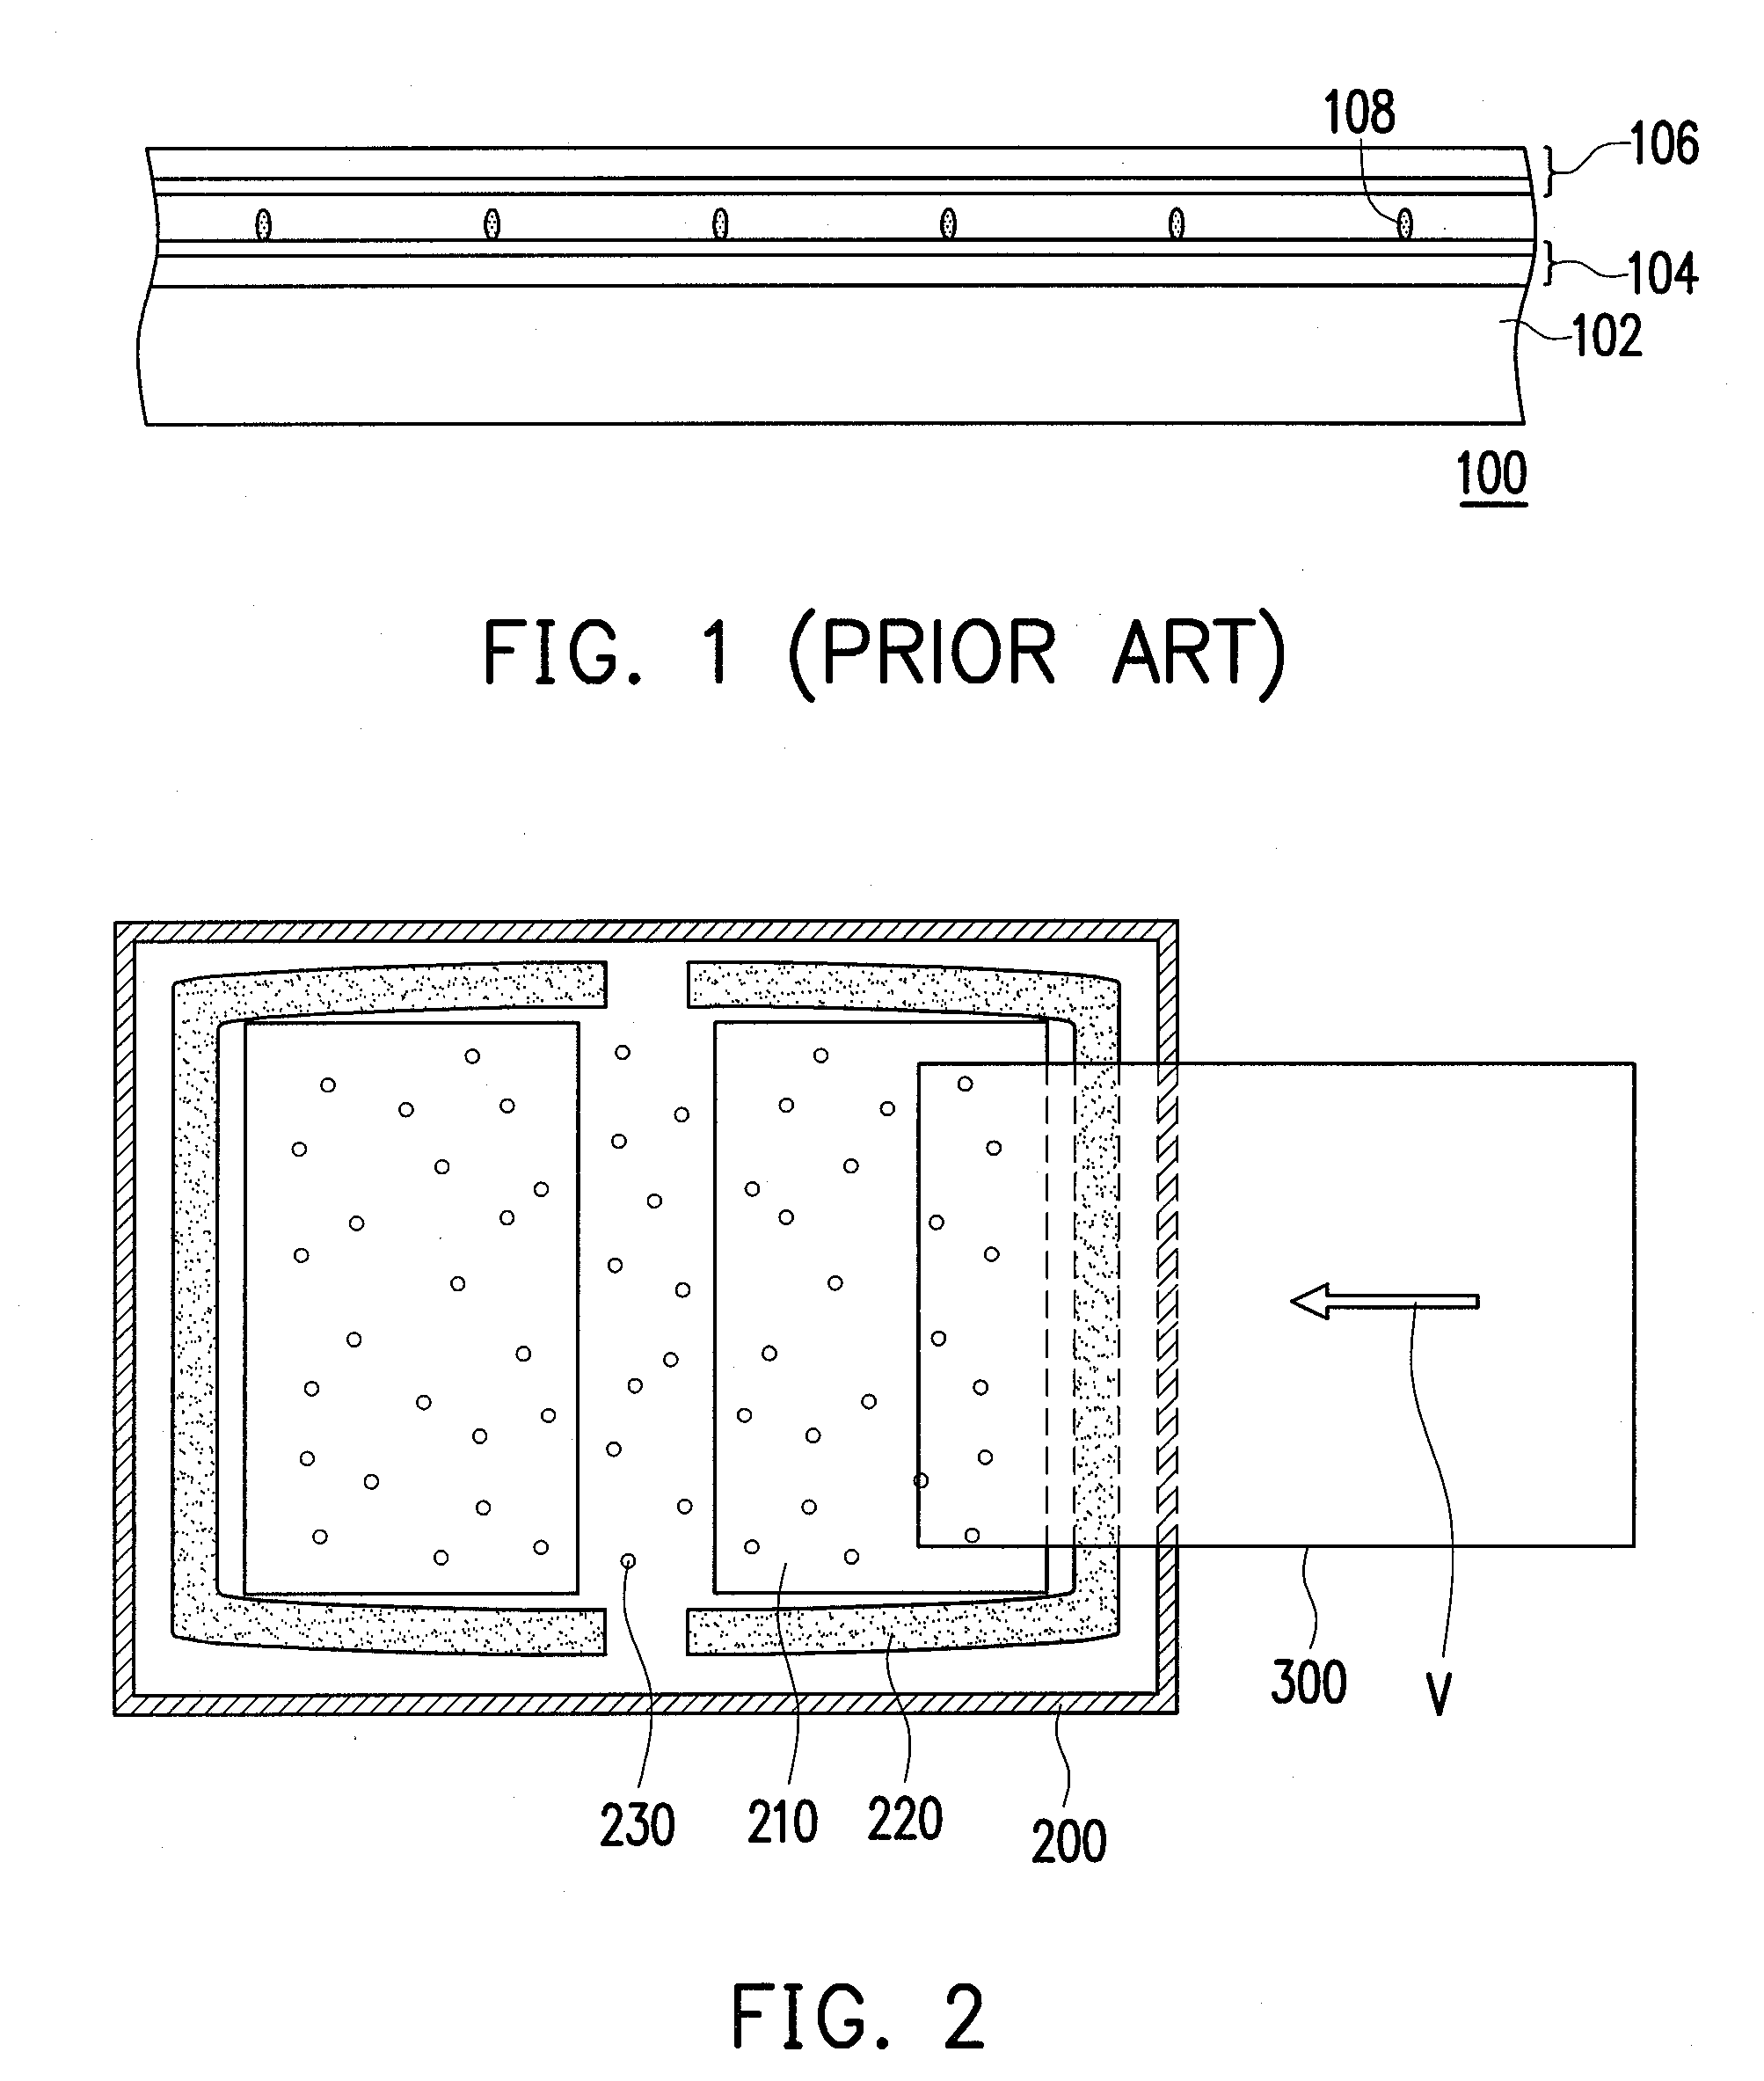 Method of fabricating transparent conductive film